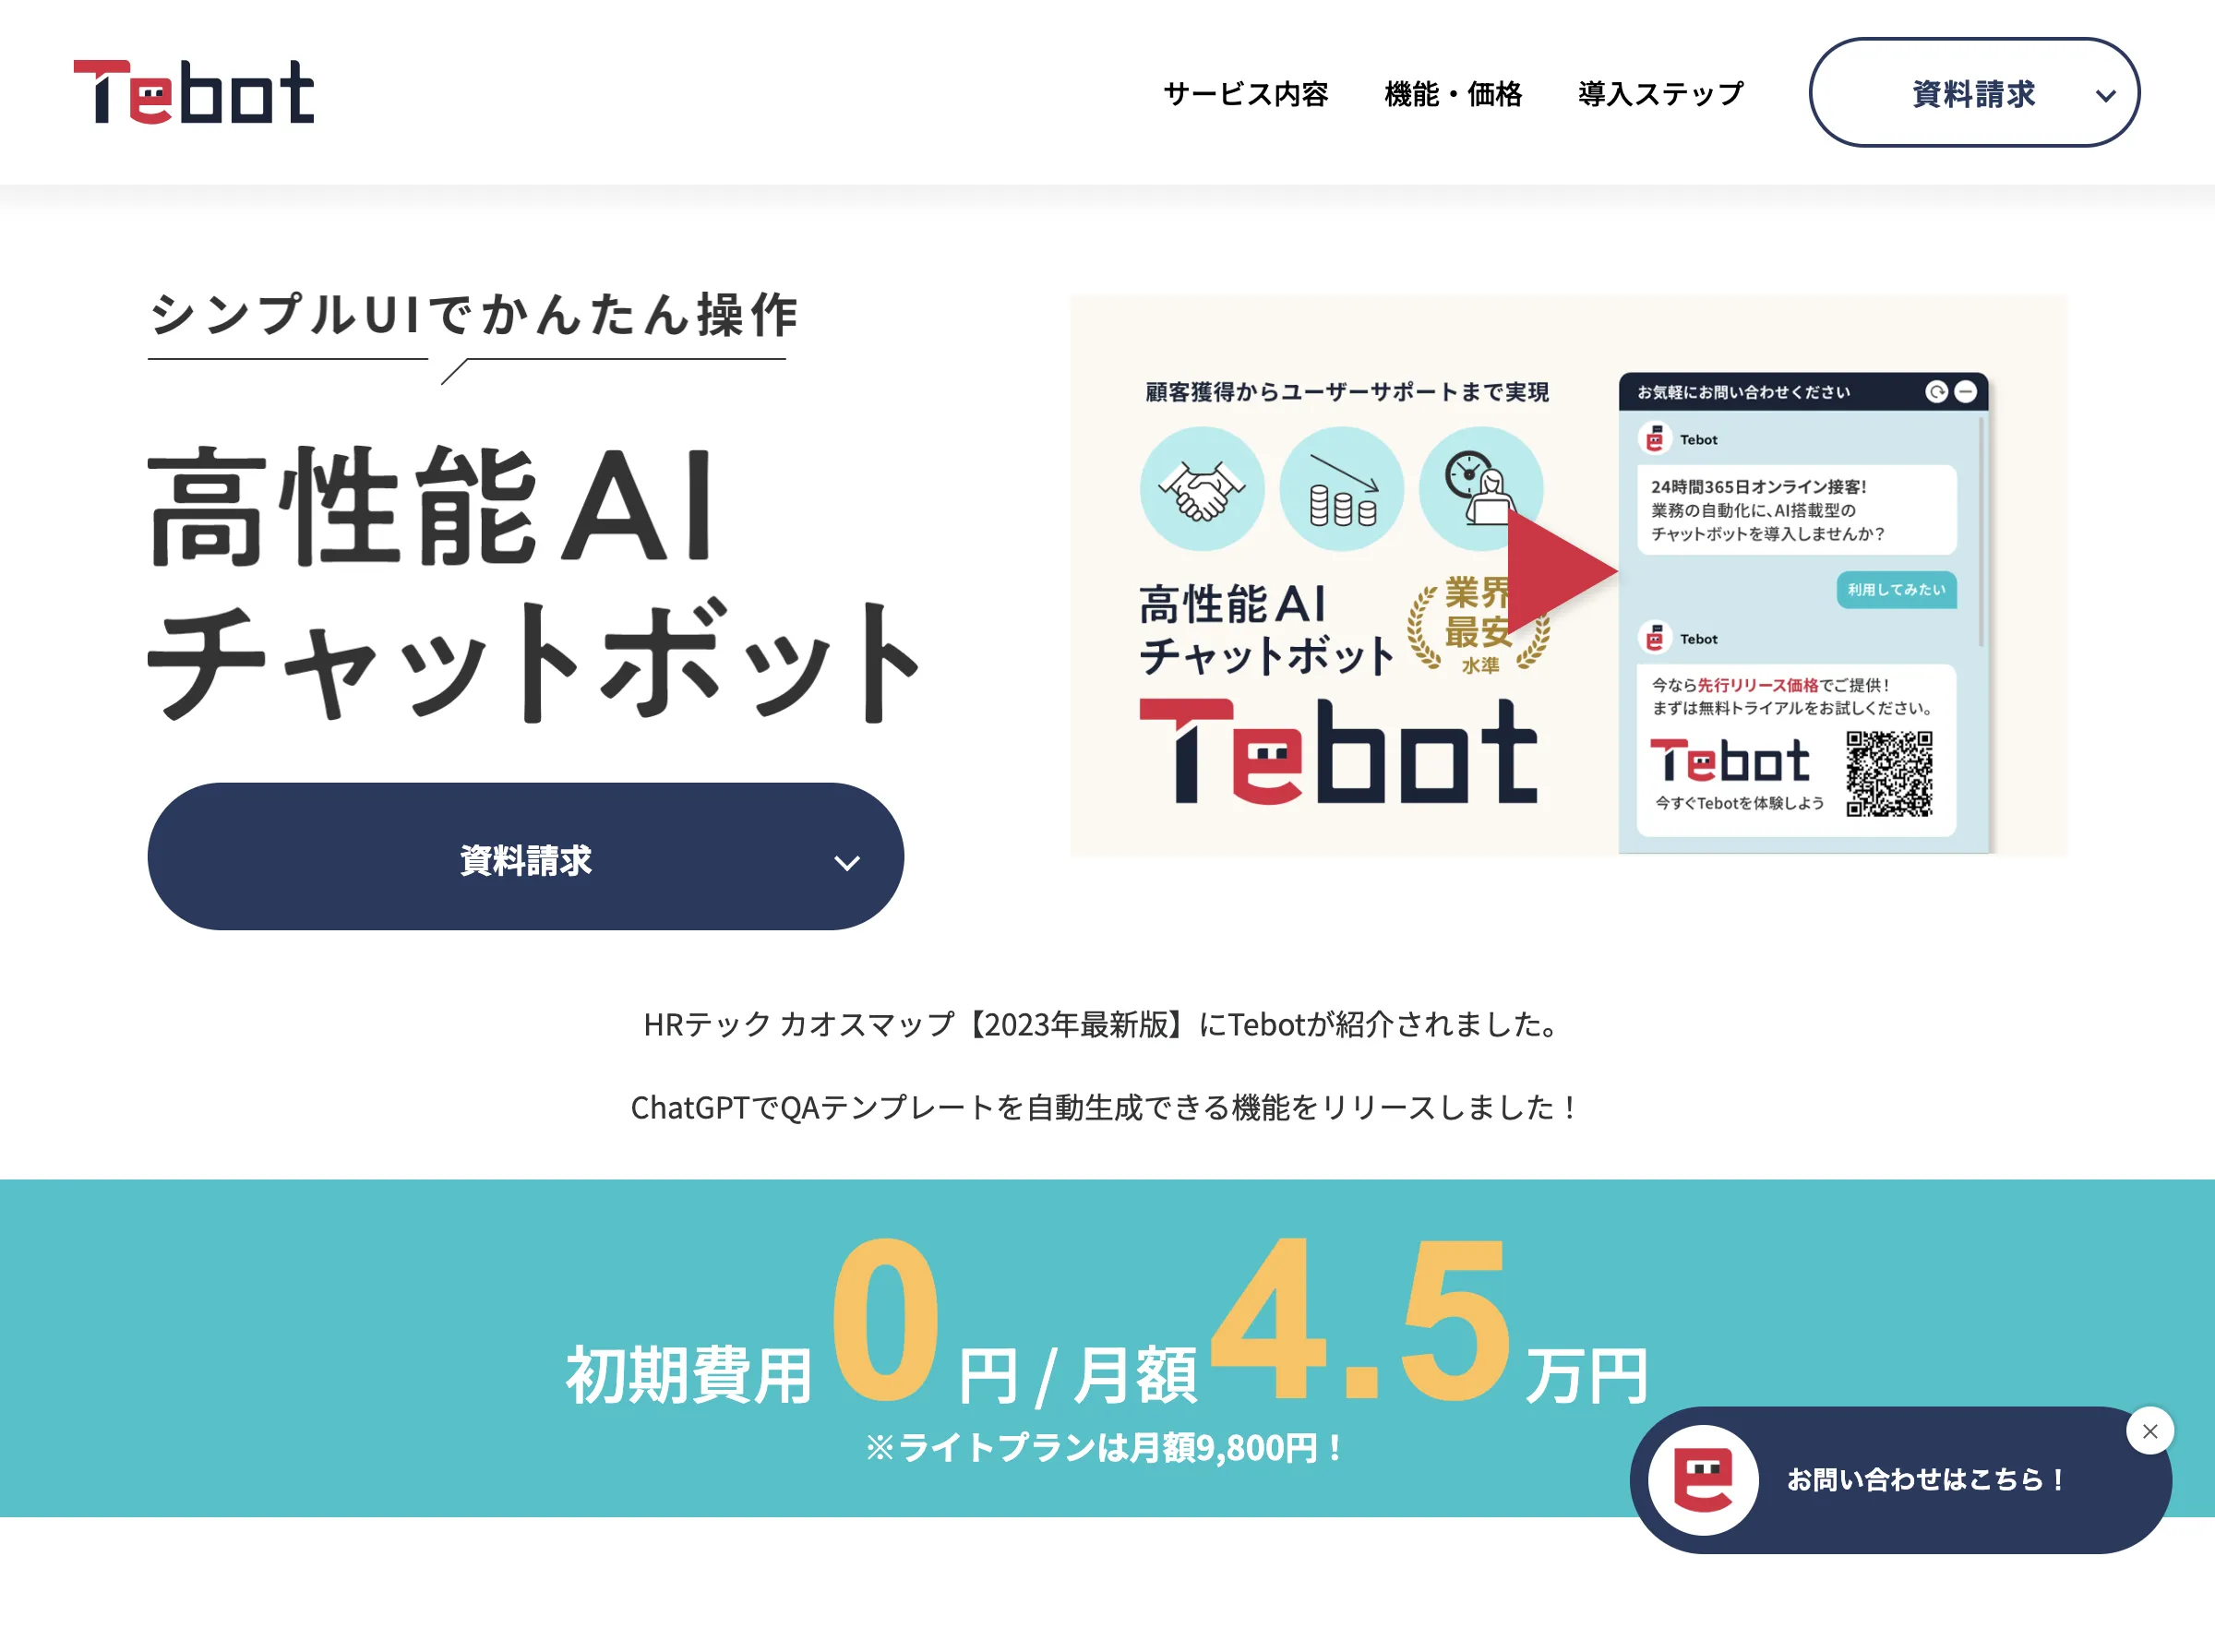 Tebot(株式会社アノテテ)